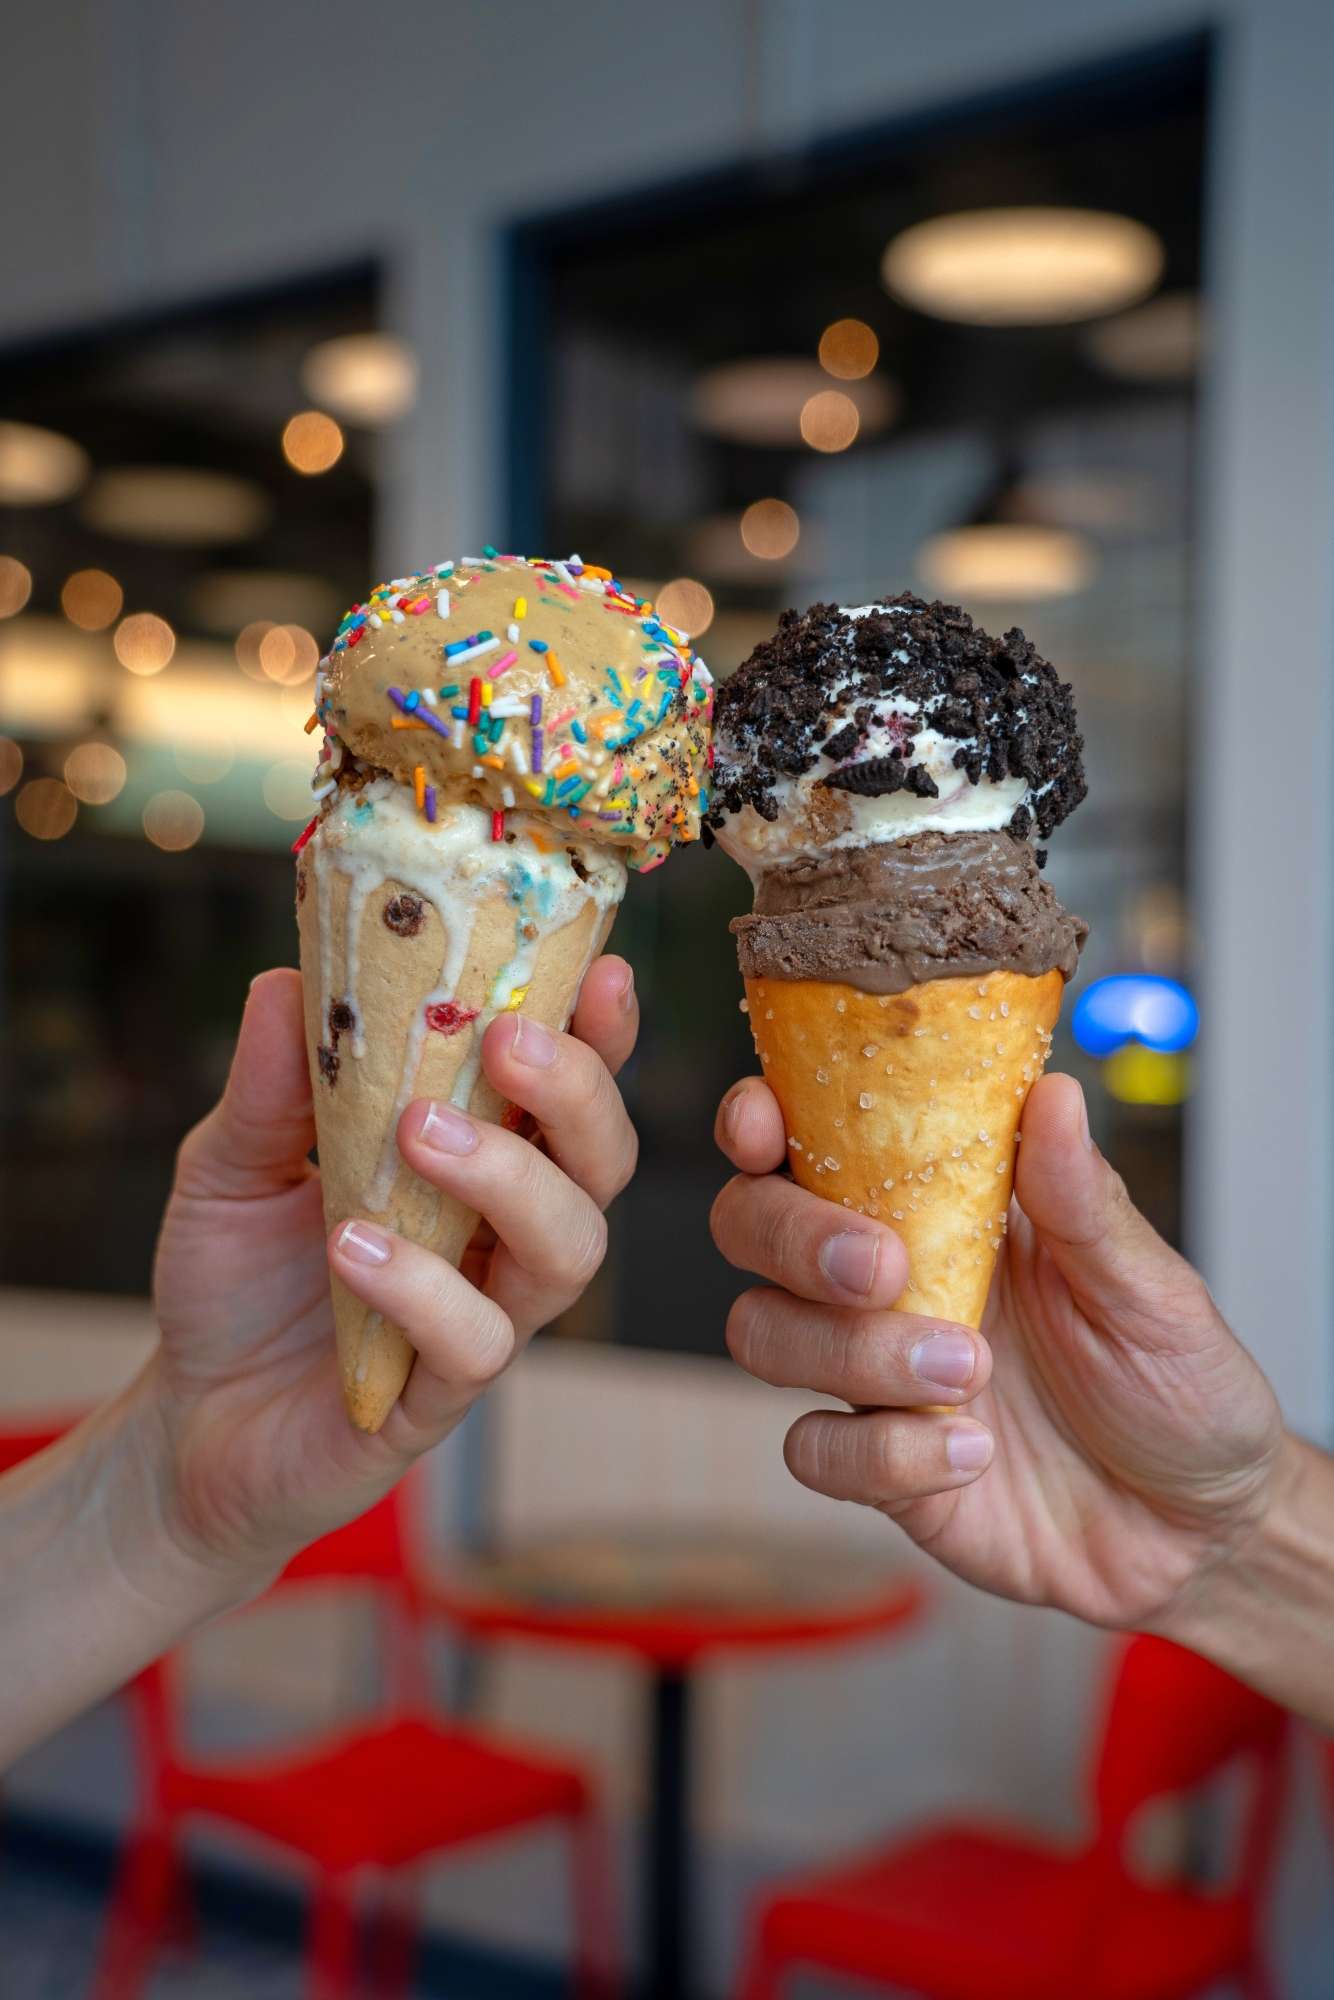 There are two ice cream cones.